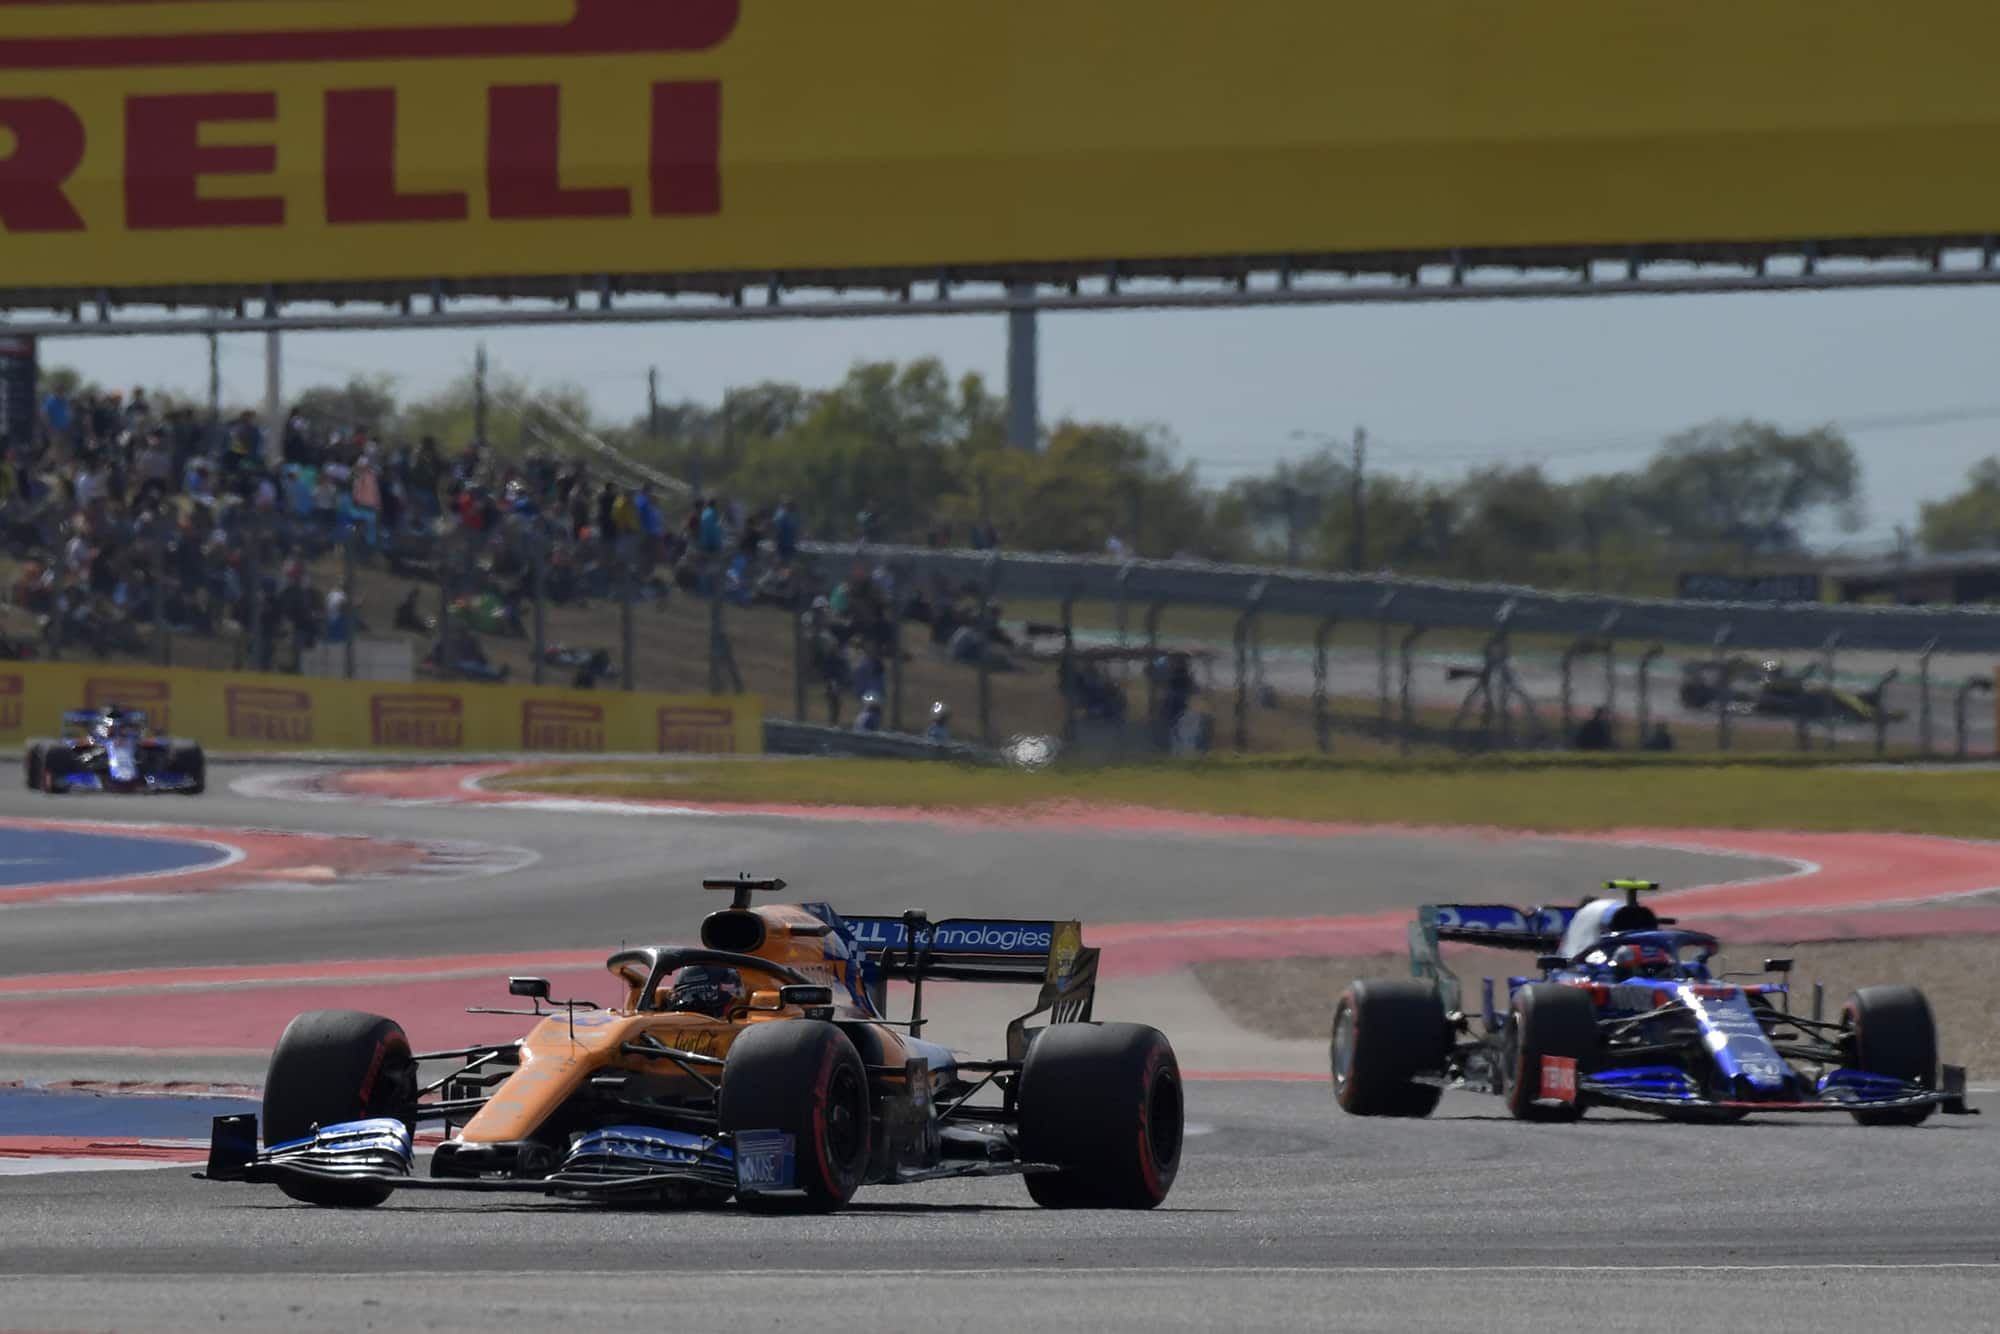 Carlos Sainz ahead of Daniil Kvyat during qualifying for the 2019 US Grand Prix